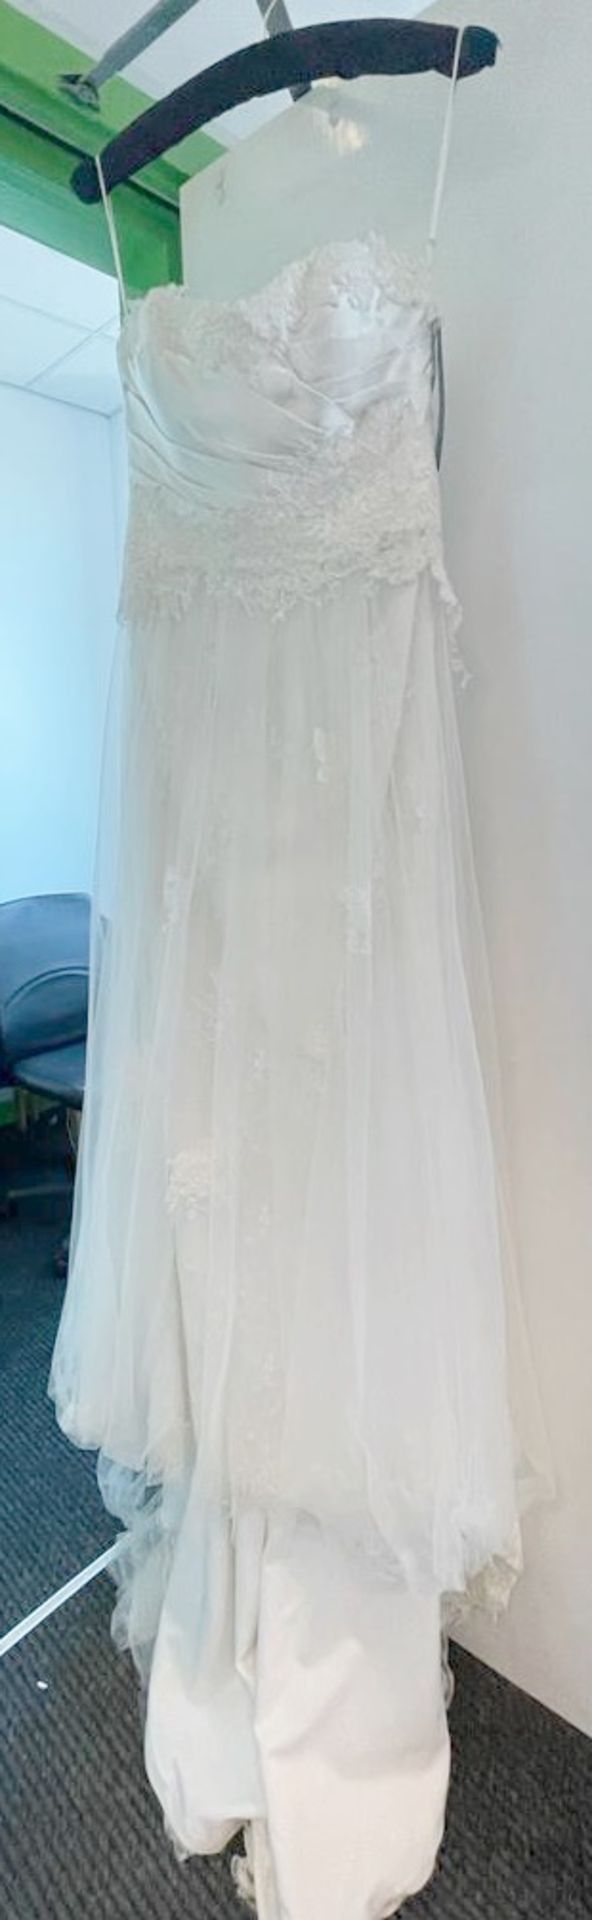 1 x LUSAN MANDONGUS / ANNASUL Y 'Infinity' Strapless Designer Wedding Dress - UK 12 - RRP £1,700